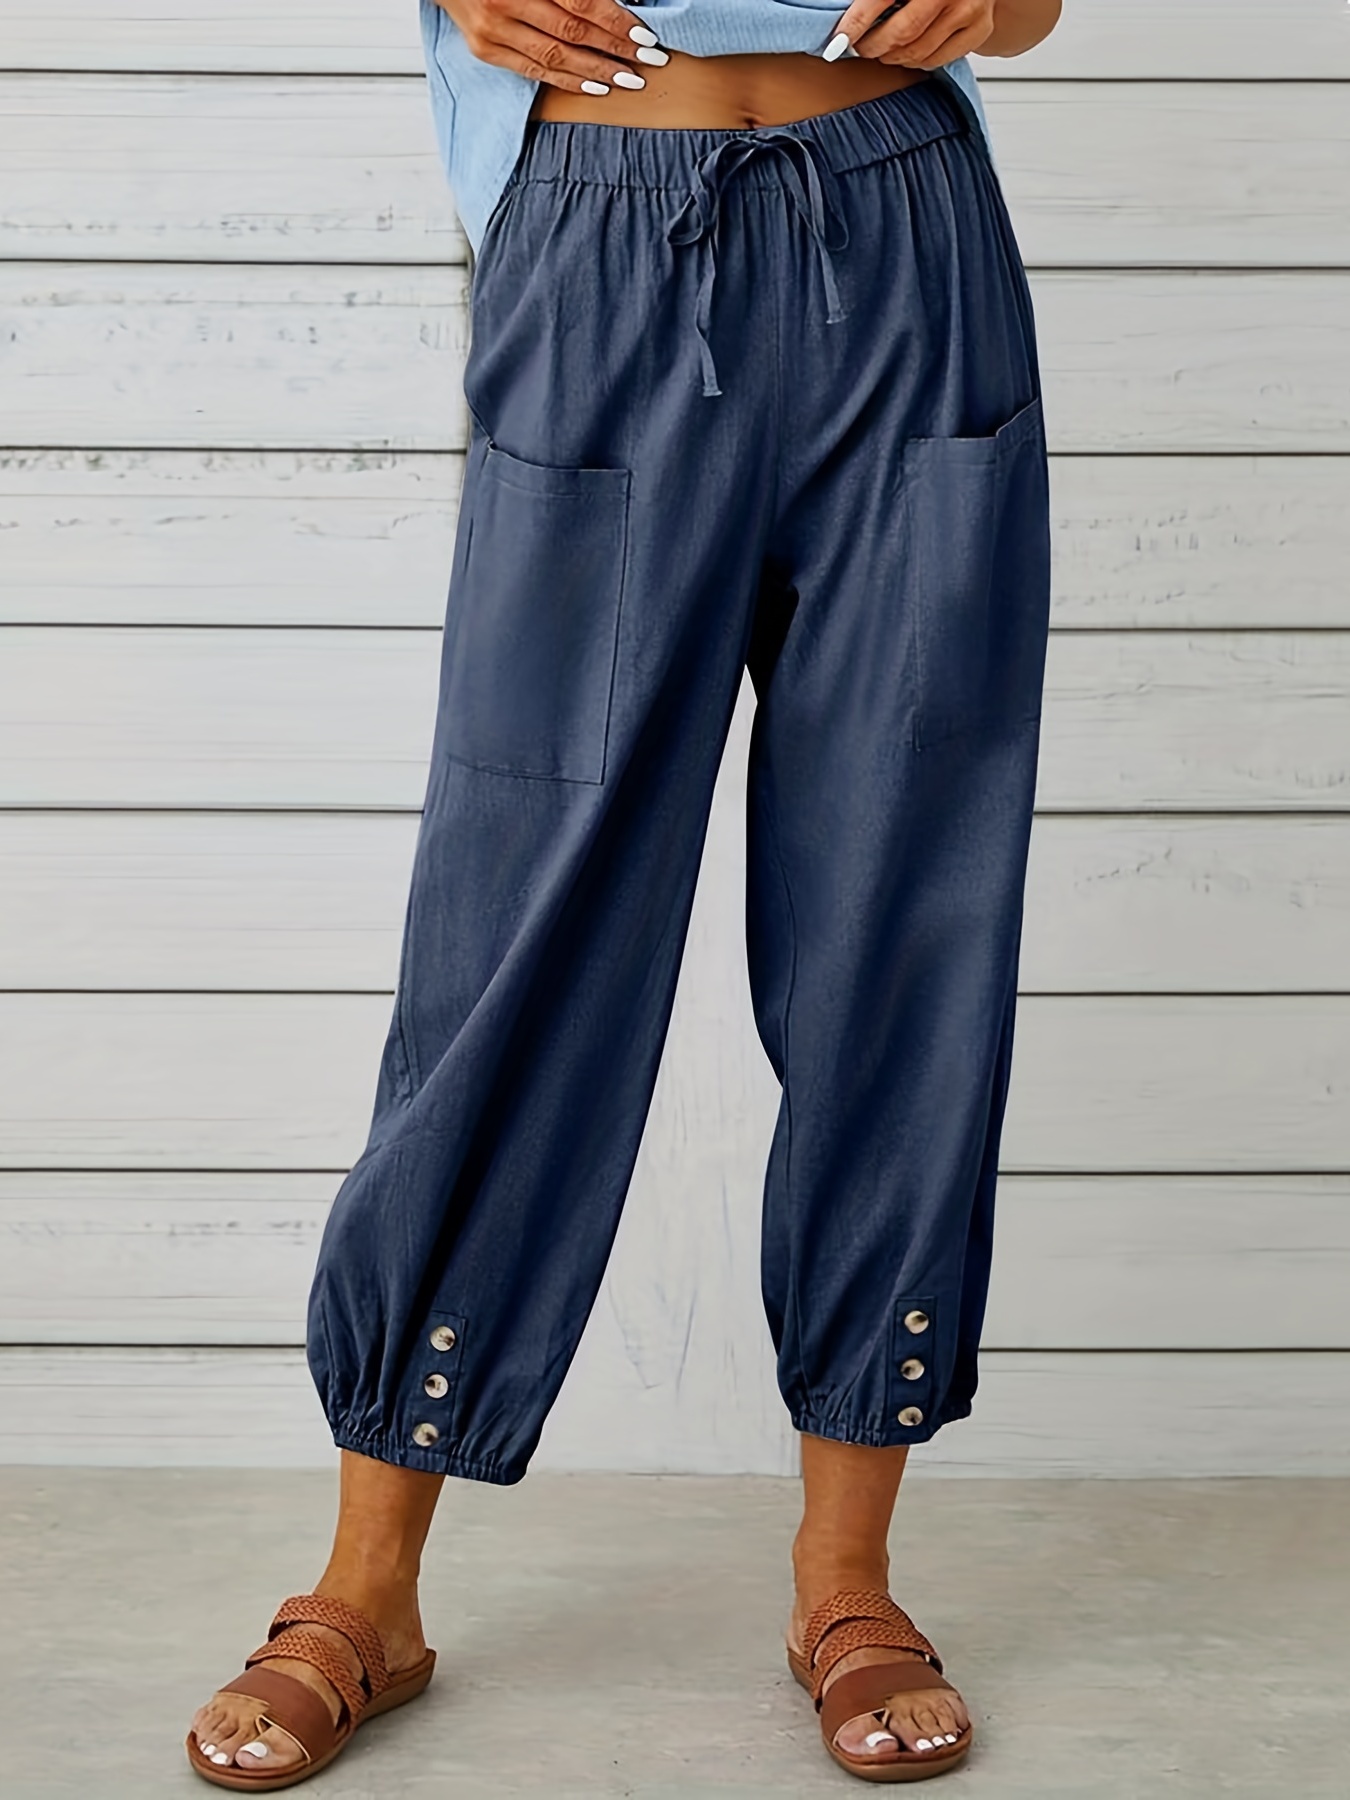 Black Linen Pants Outfit Summer Casual Street Styles, Women's Wide Leg  Linen Pants With Pockets, Long Linen Palazzo Pants 0873 